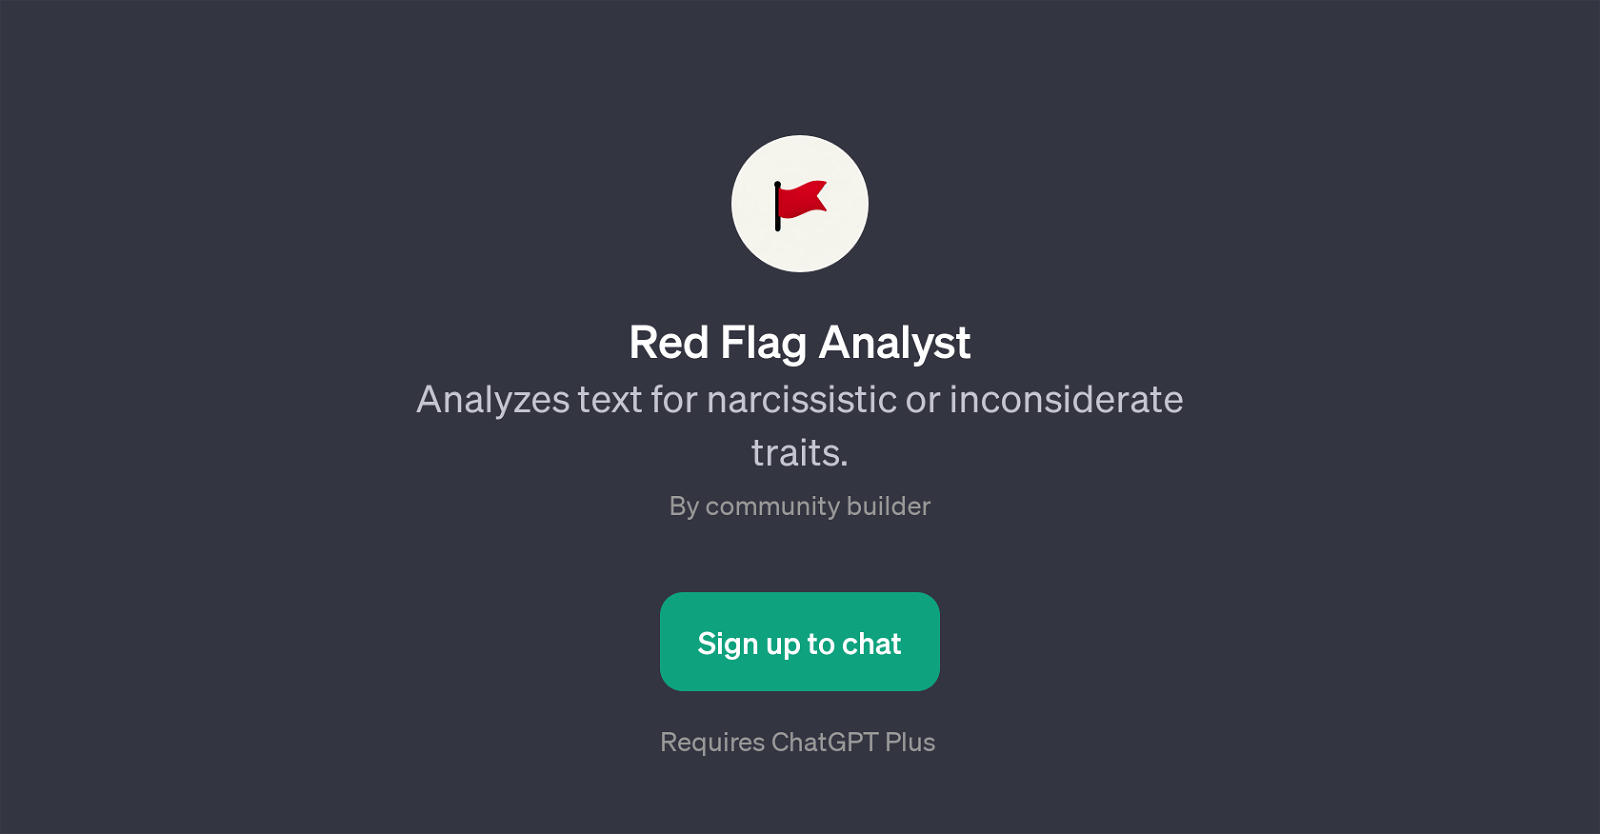 Red Flag Analyst website